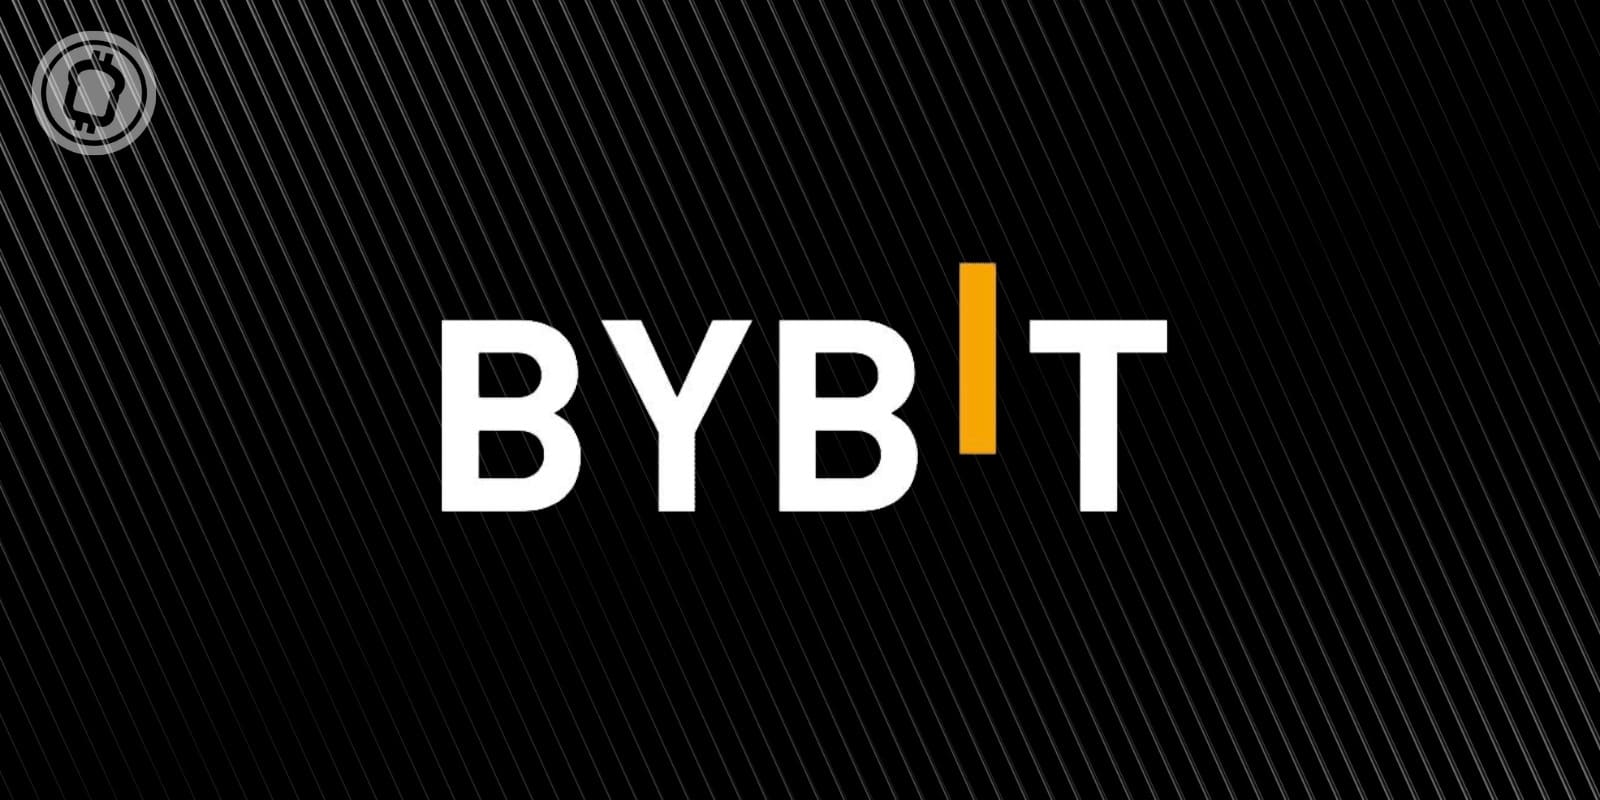 Bybit : 8 millions de dollars à gagner avec le World Series Of Trading (WSOT)